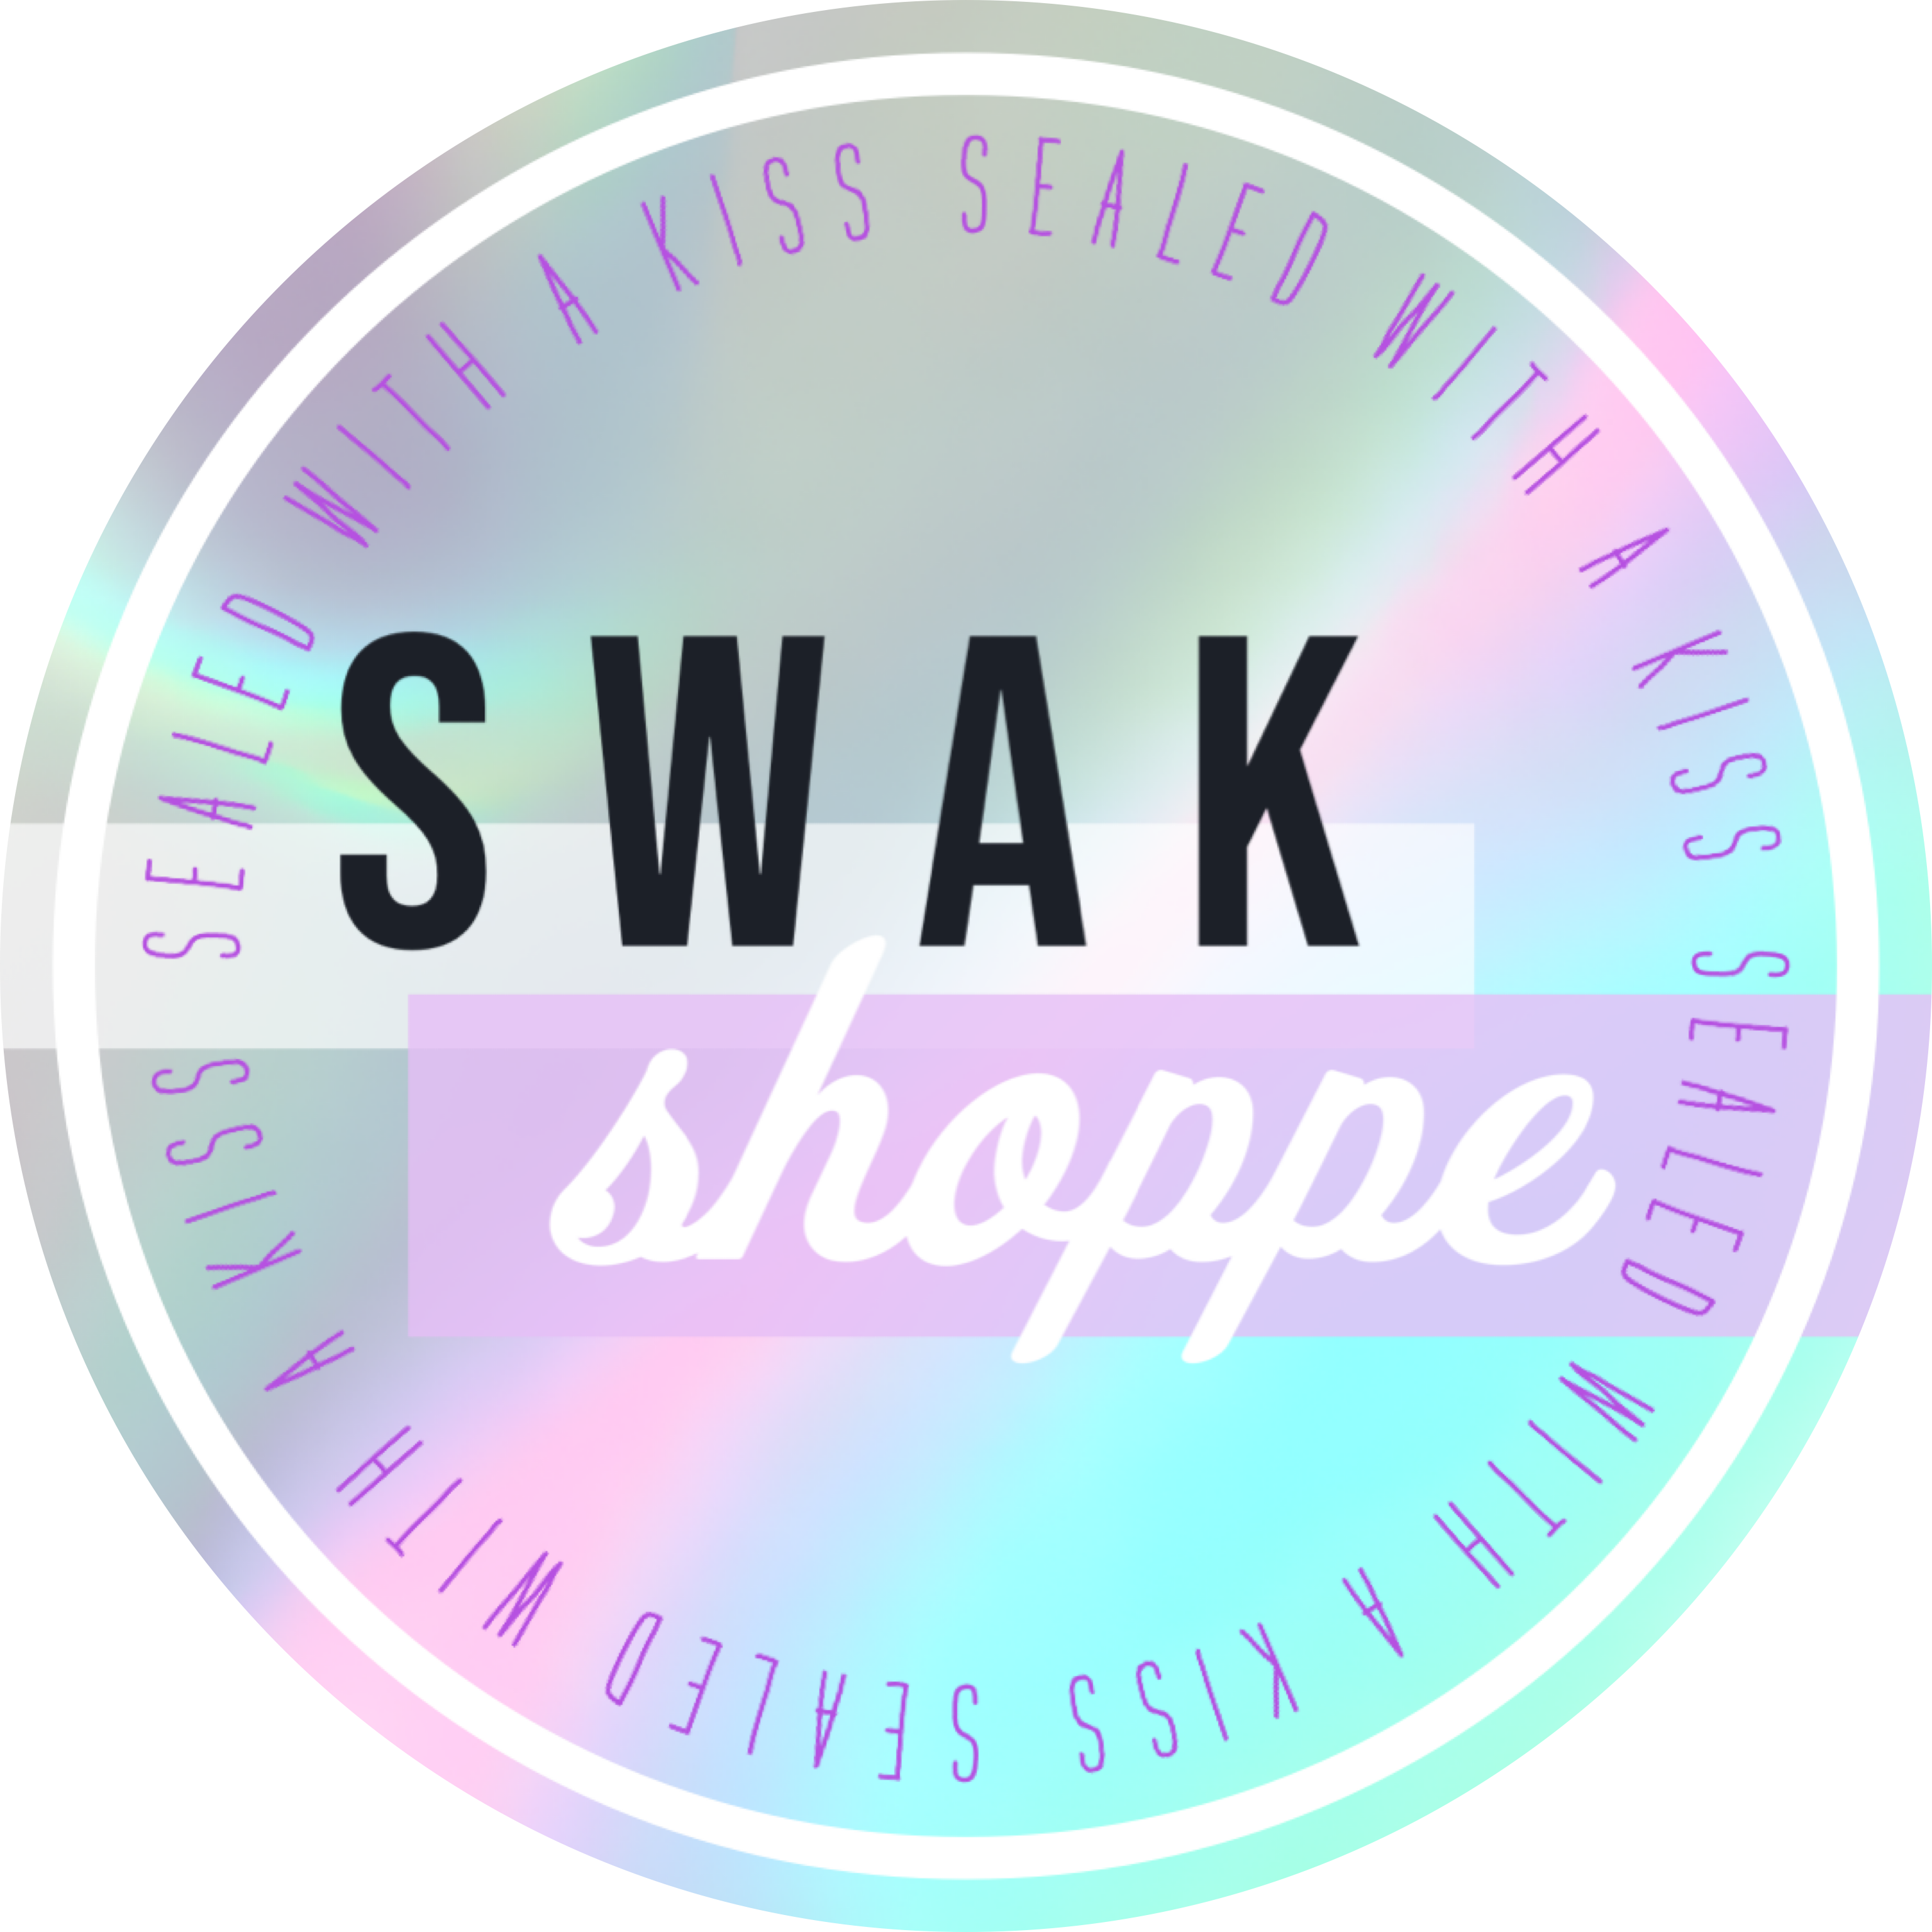 The SWAK Shoppe